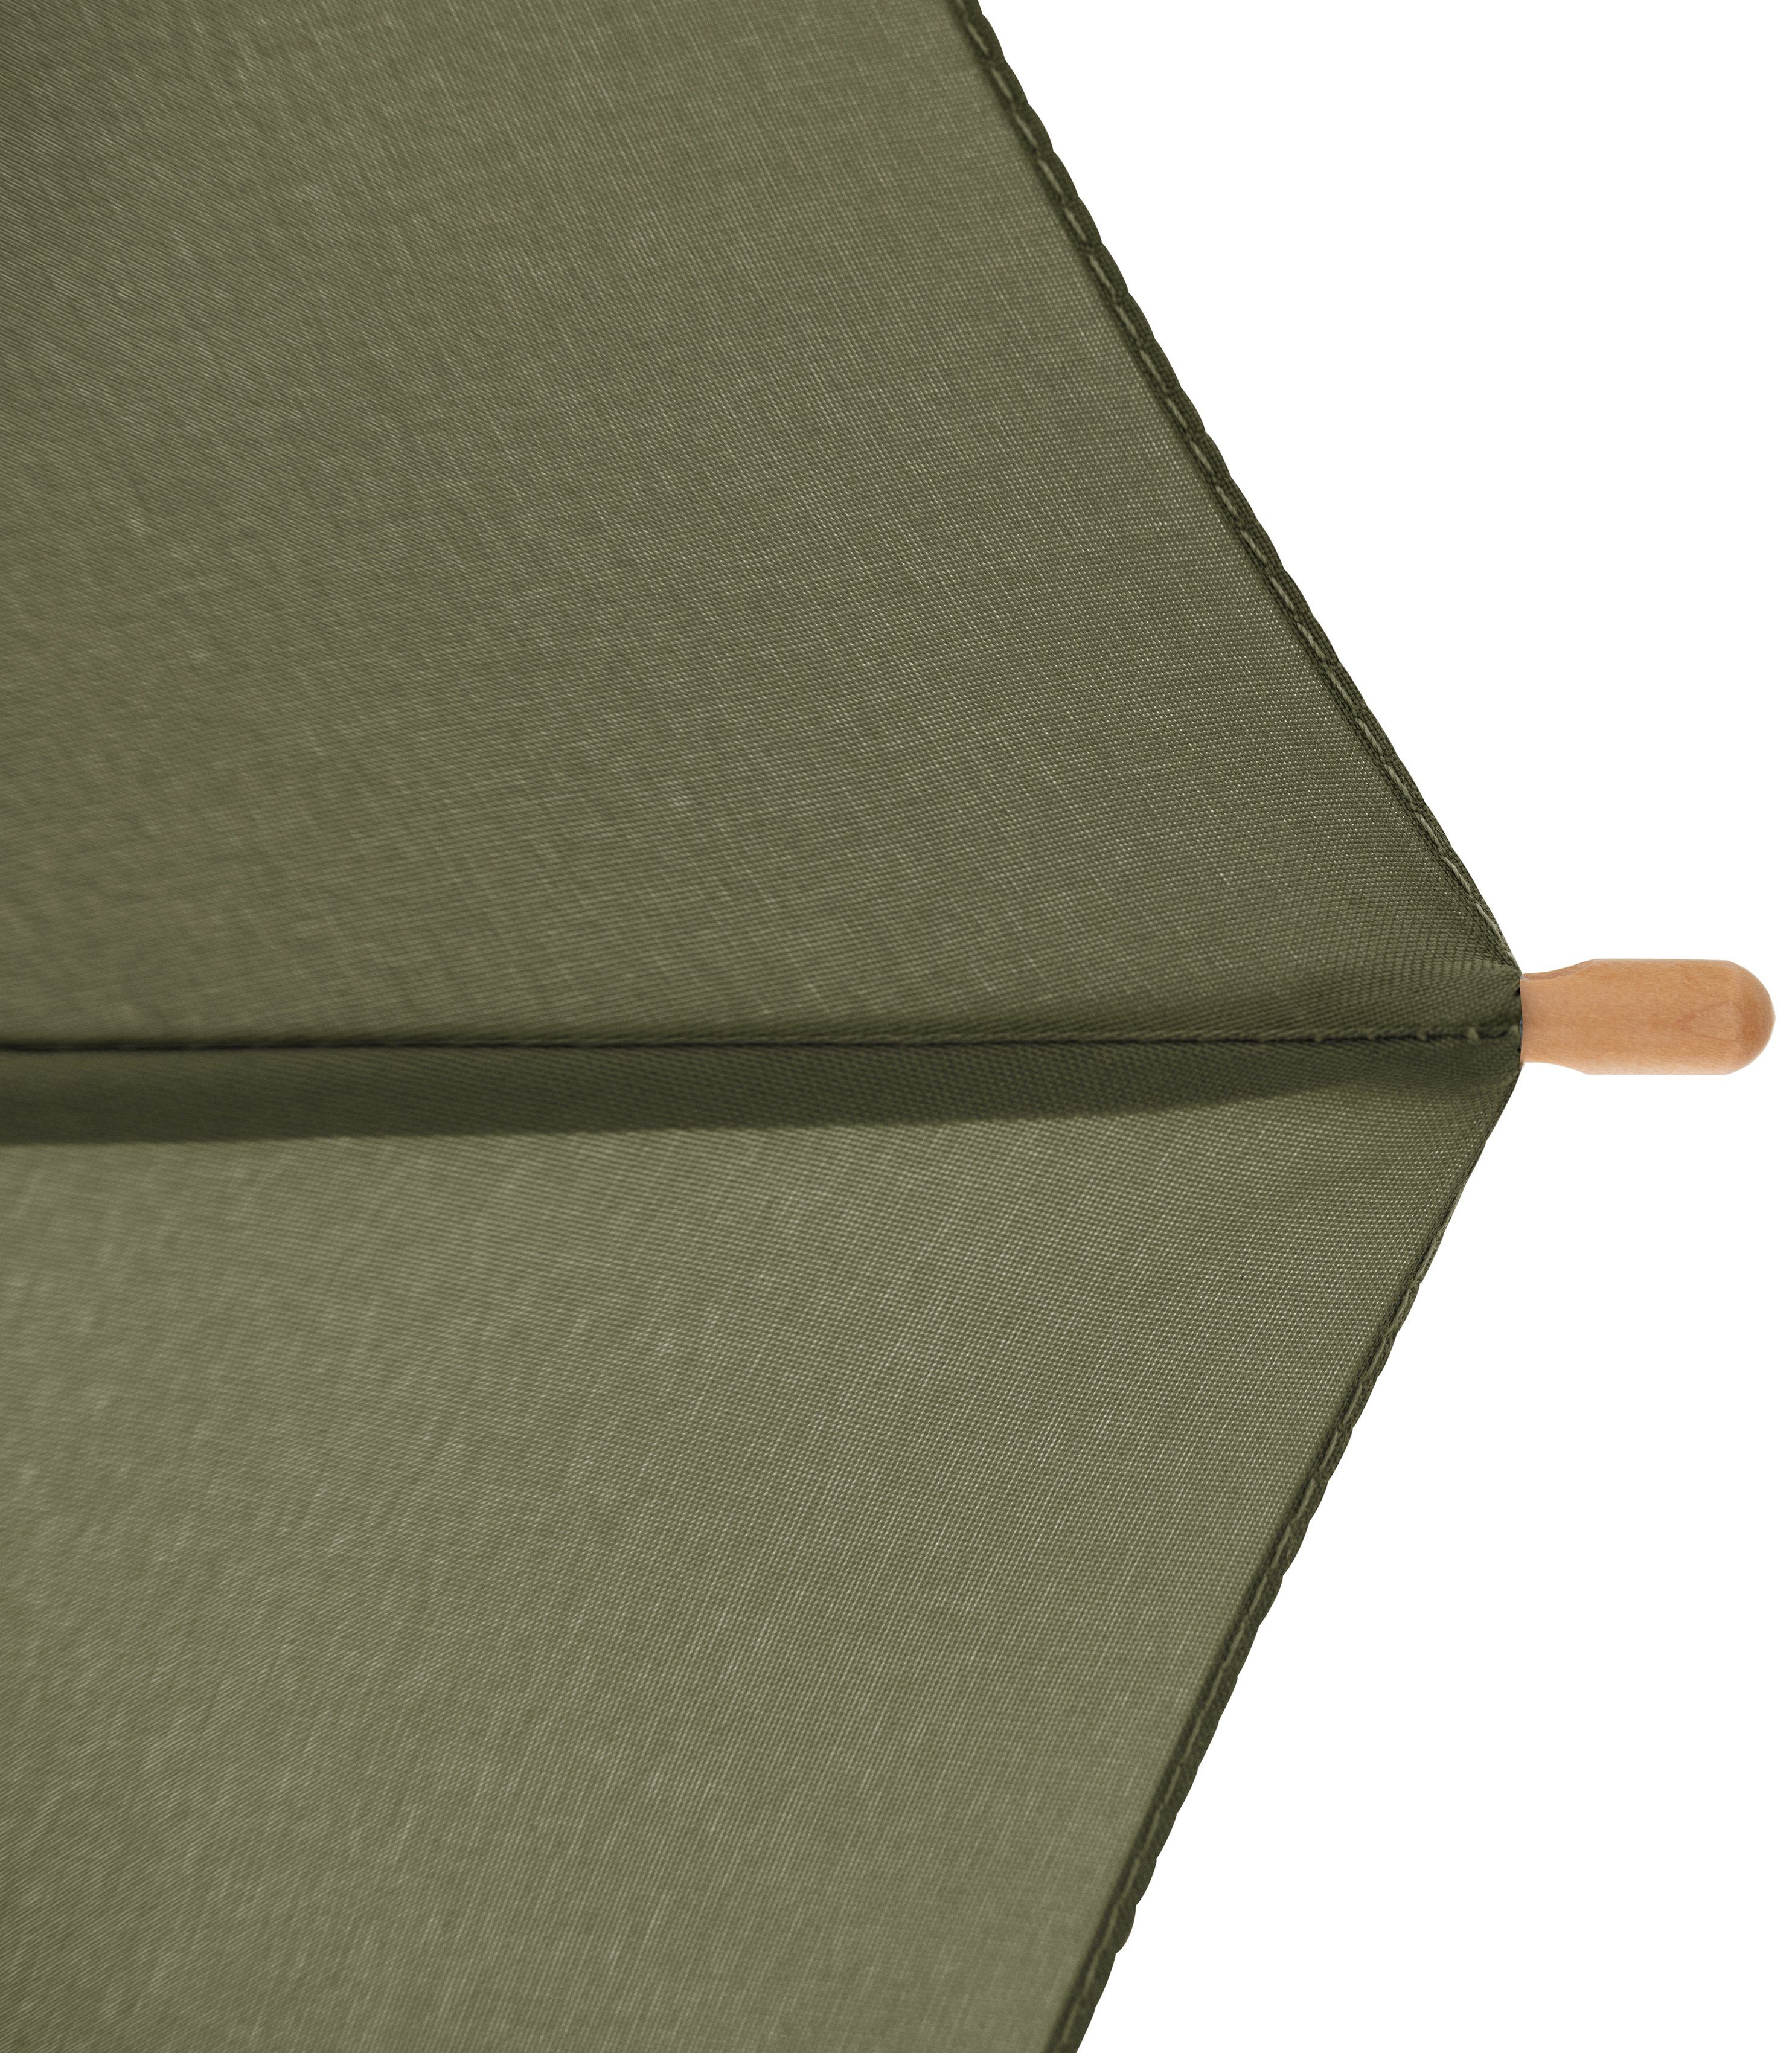 Holz doppler® aus deep aus recyceltem mit Material Stockregenschirm Schirmgriff nature olive, Long,